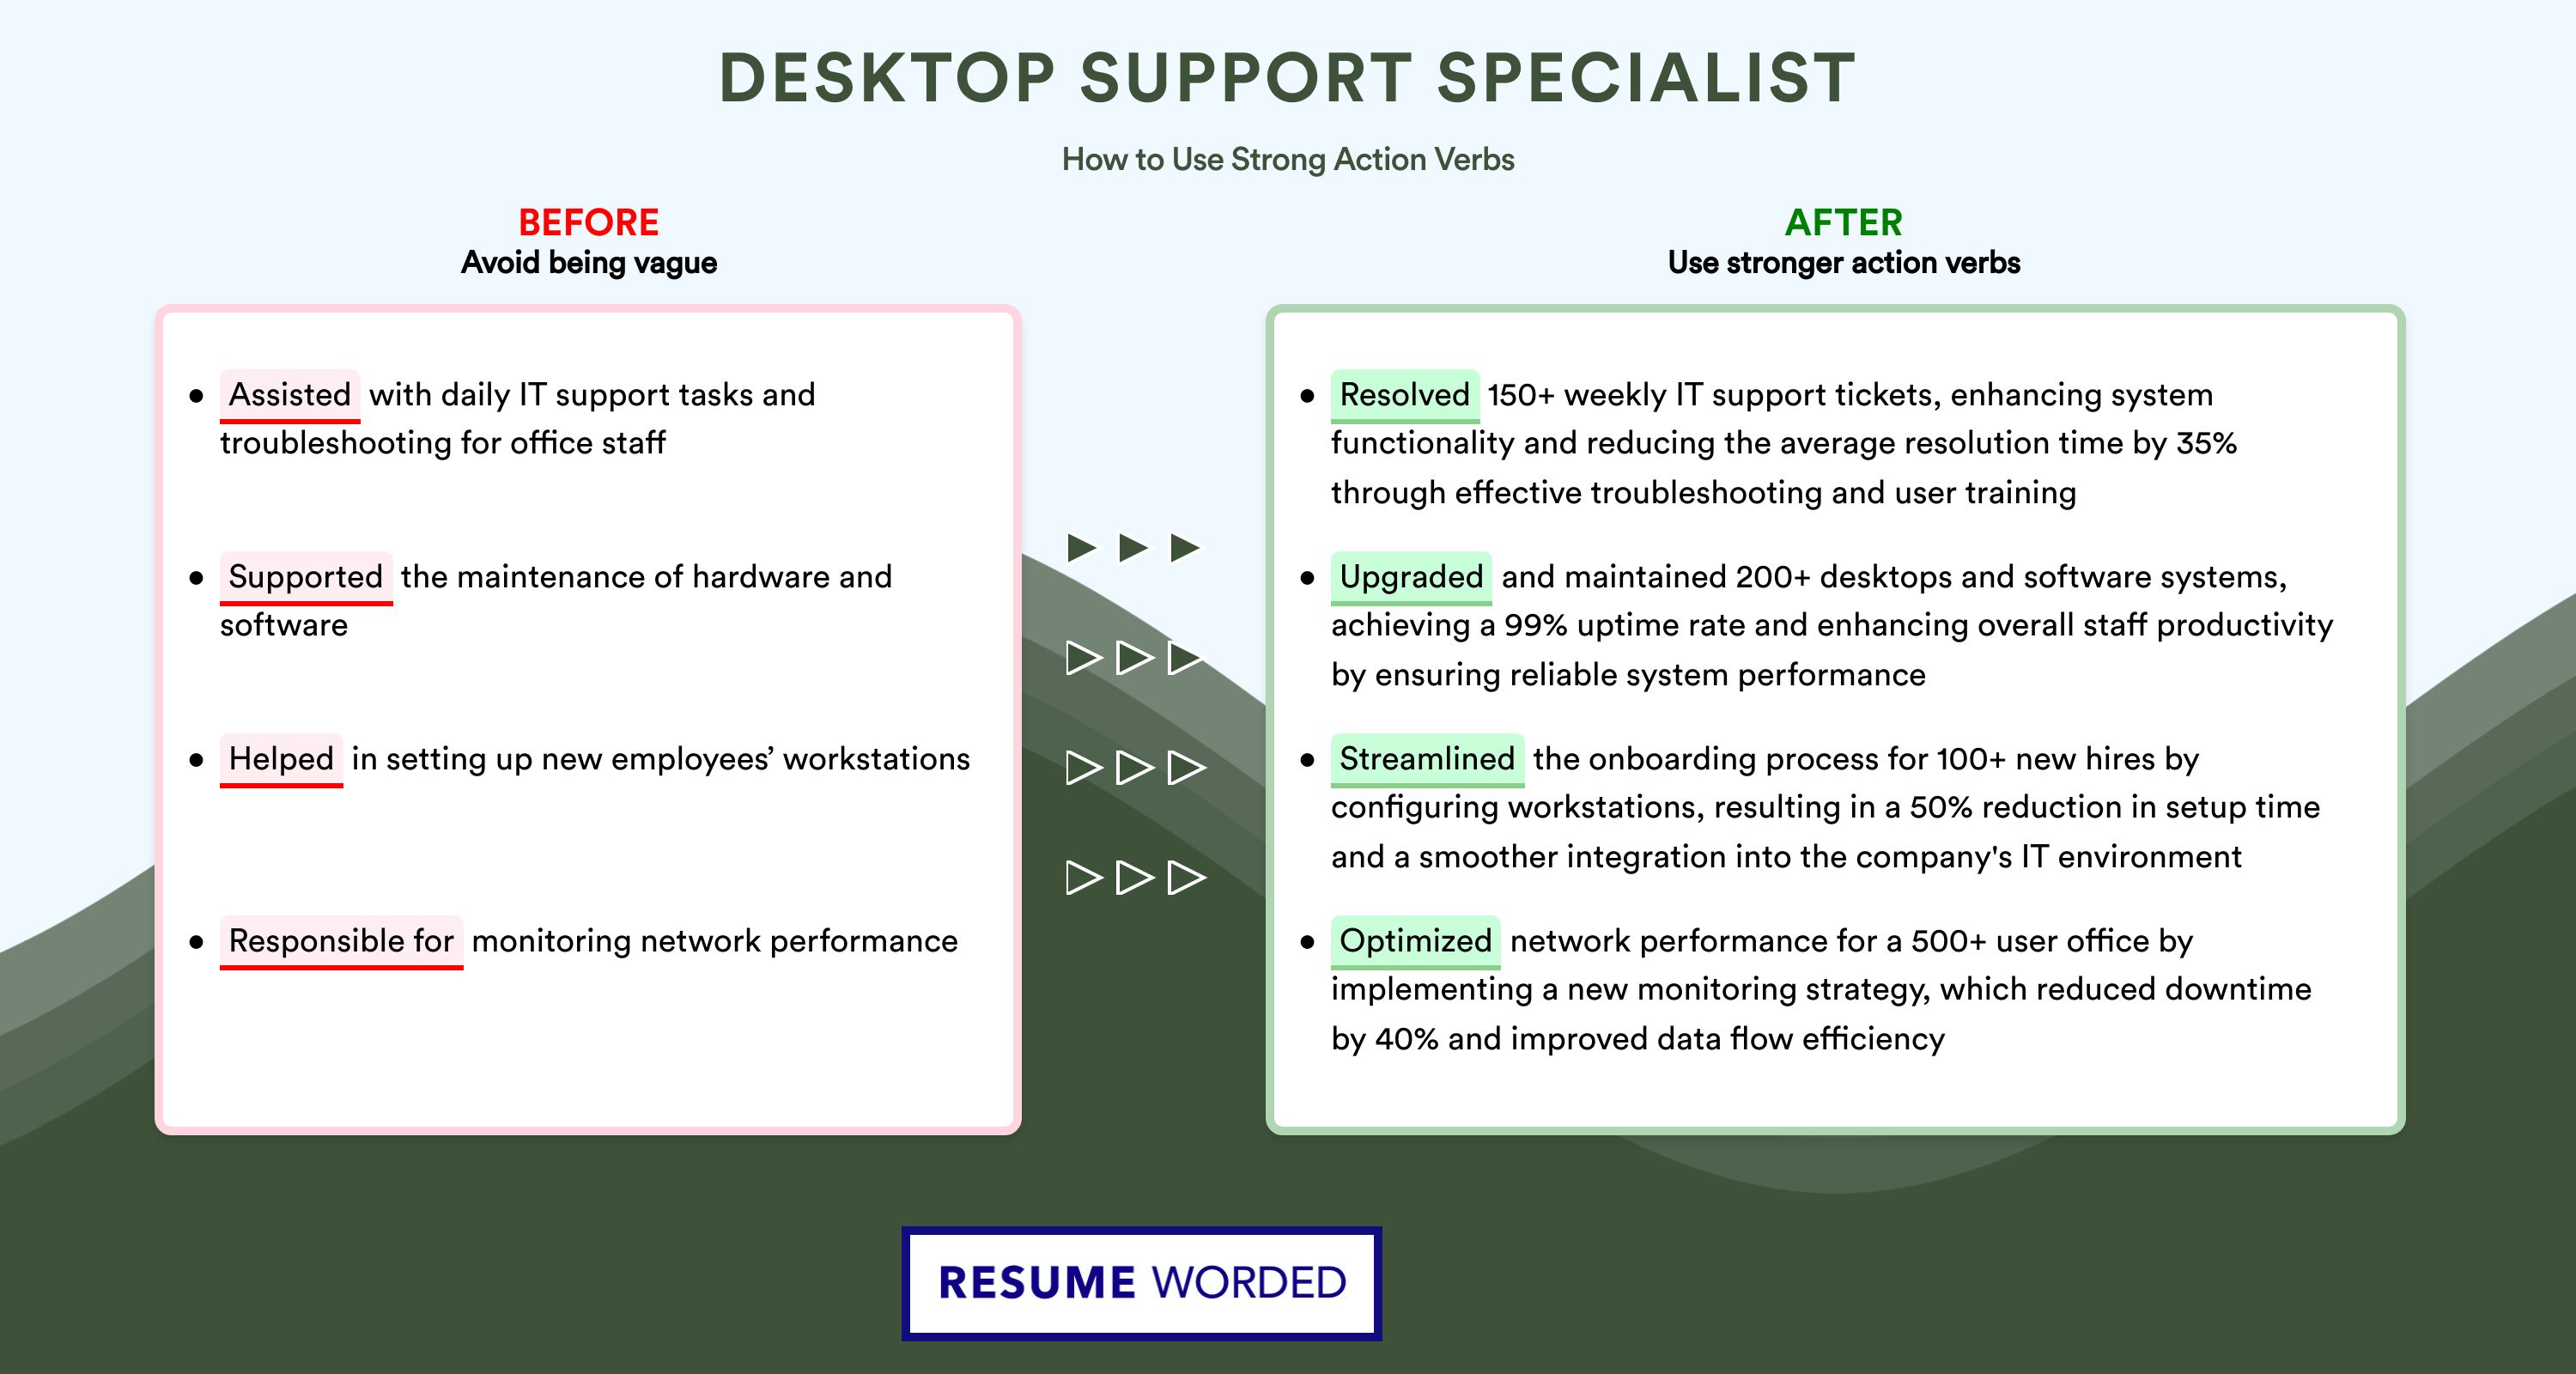 Action Verbs for Desktop Support Specialist